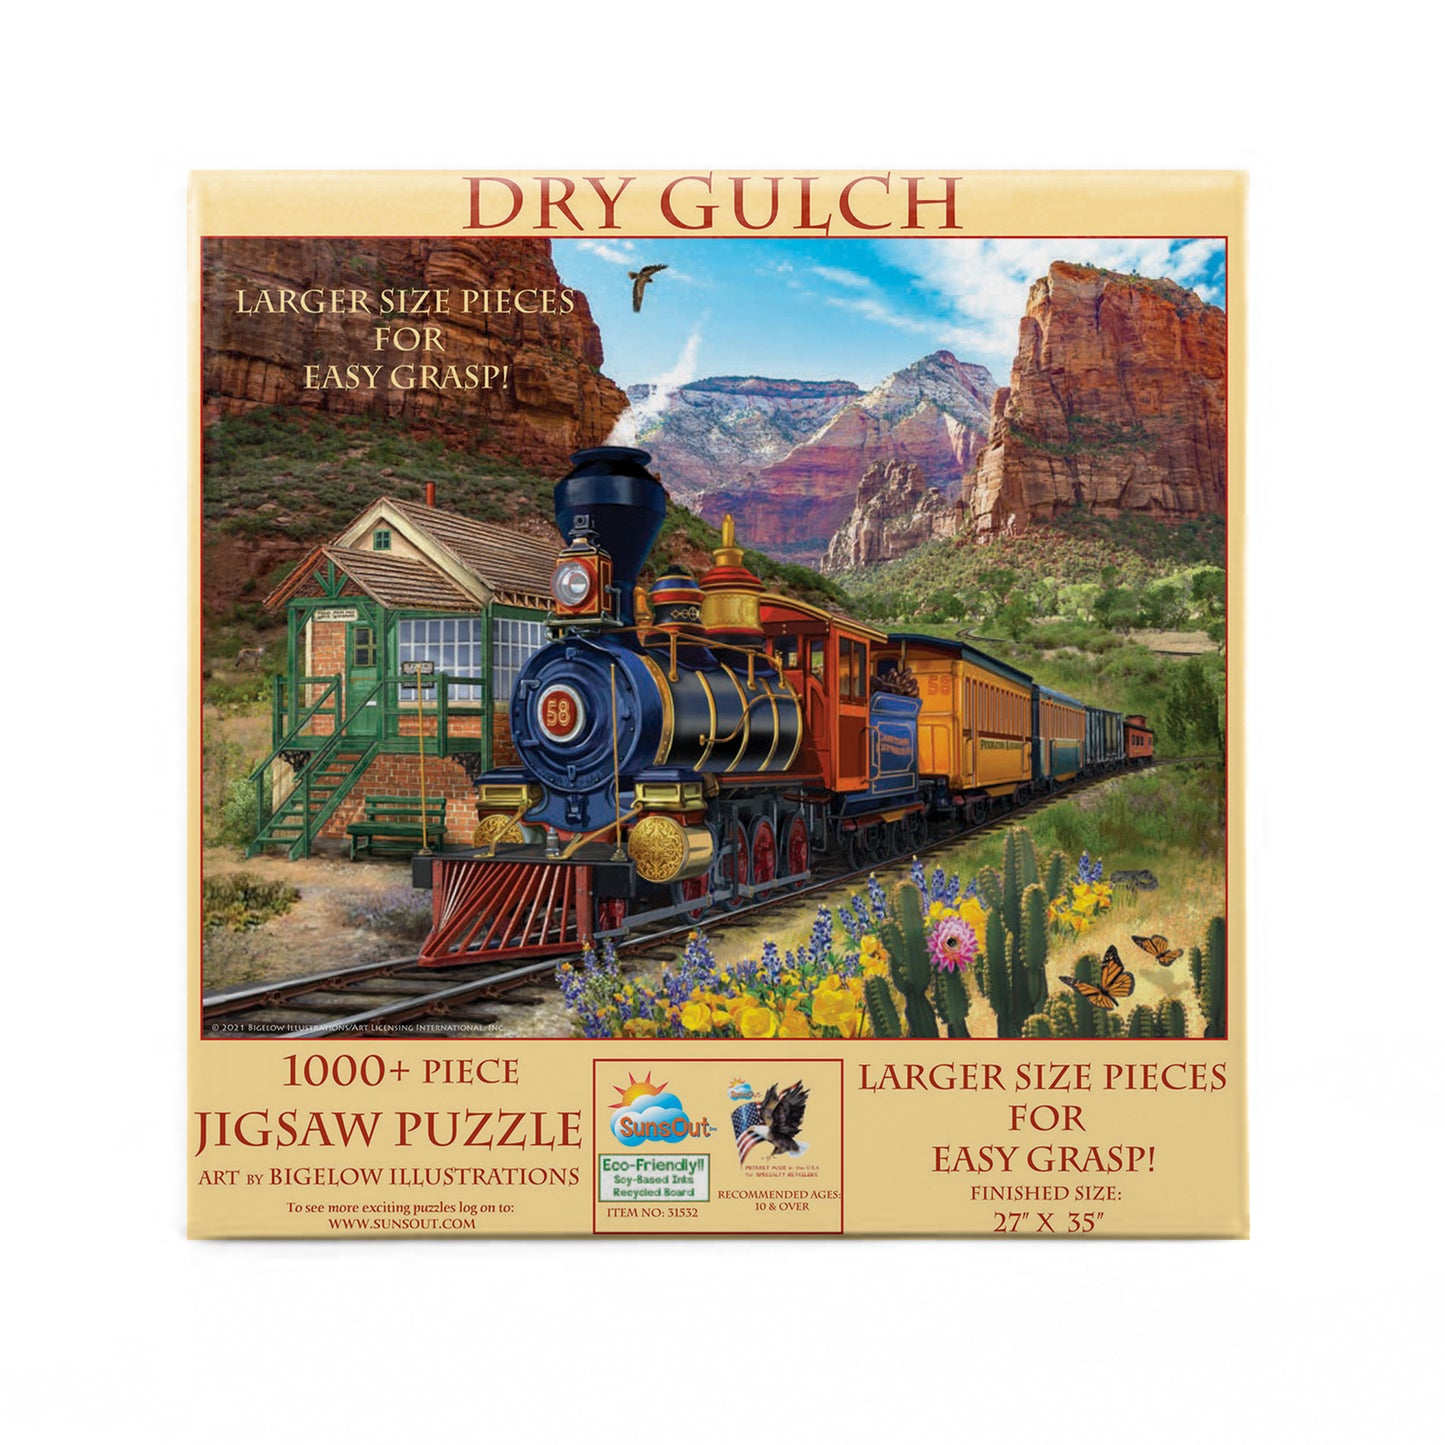 Dry Gulch - 1000 Large Piece Jigsaw Puzzle